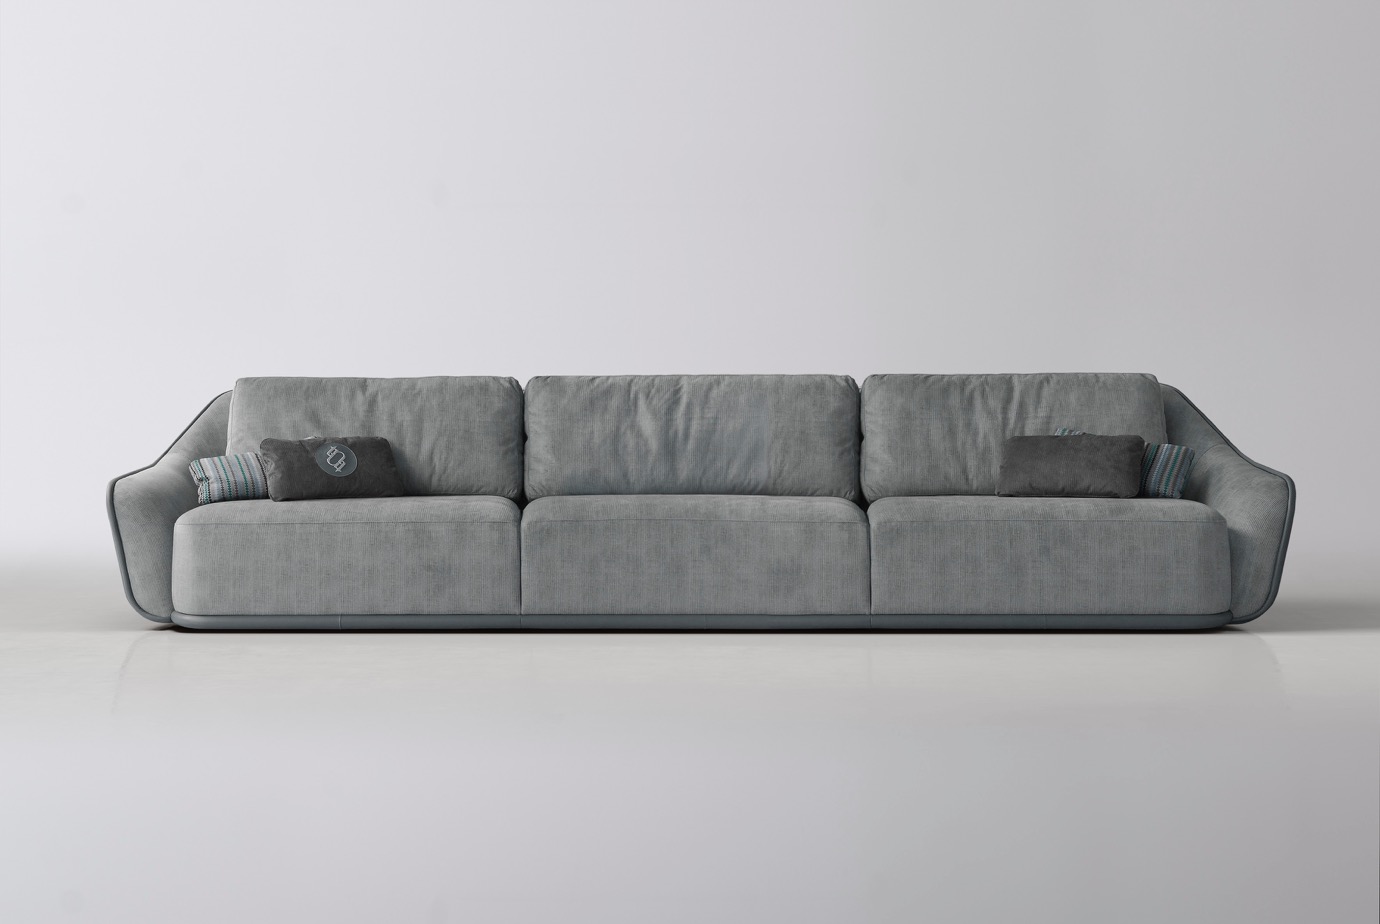 Shell - Modular Sofa / Carlos Soriano